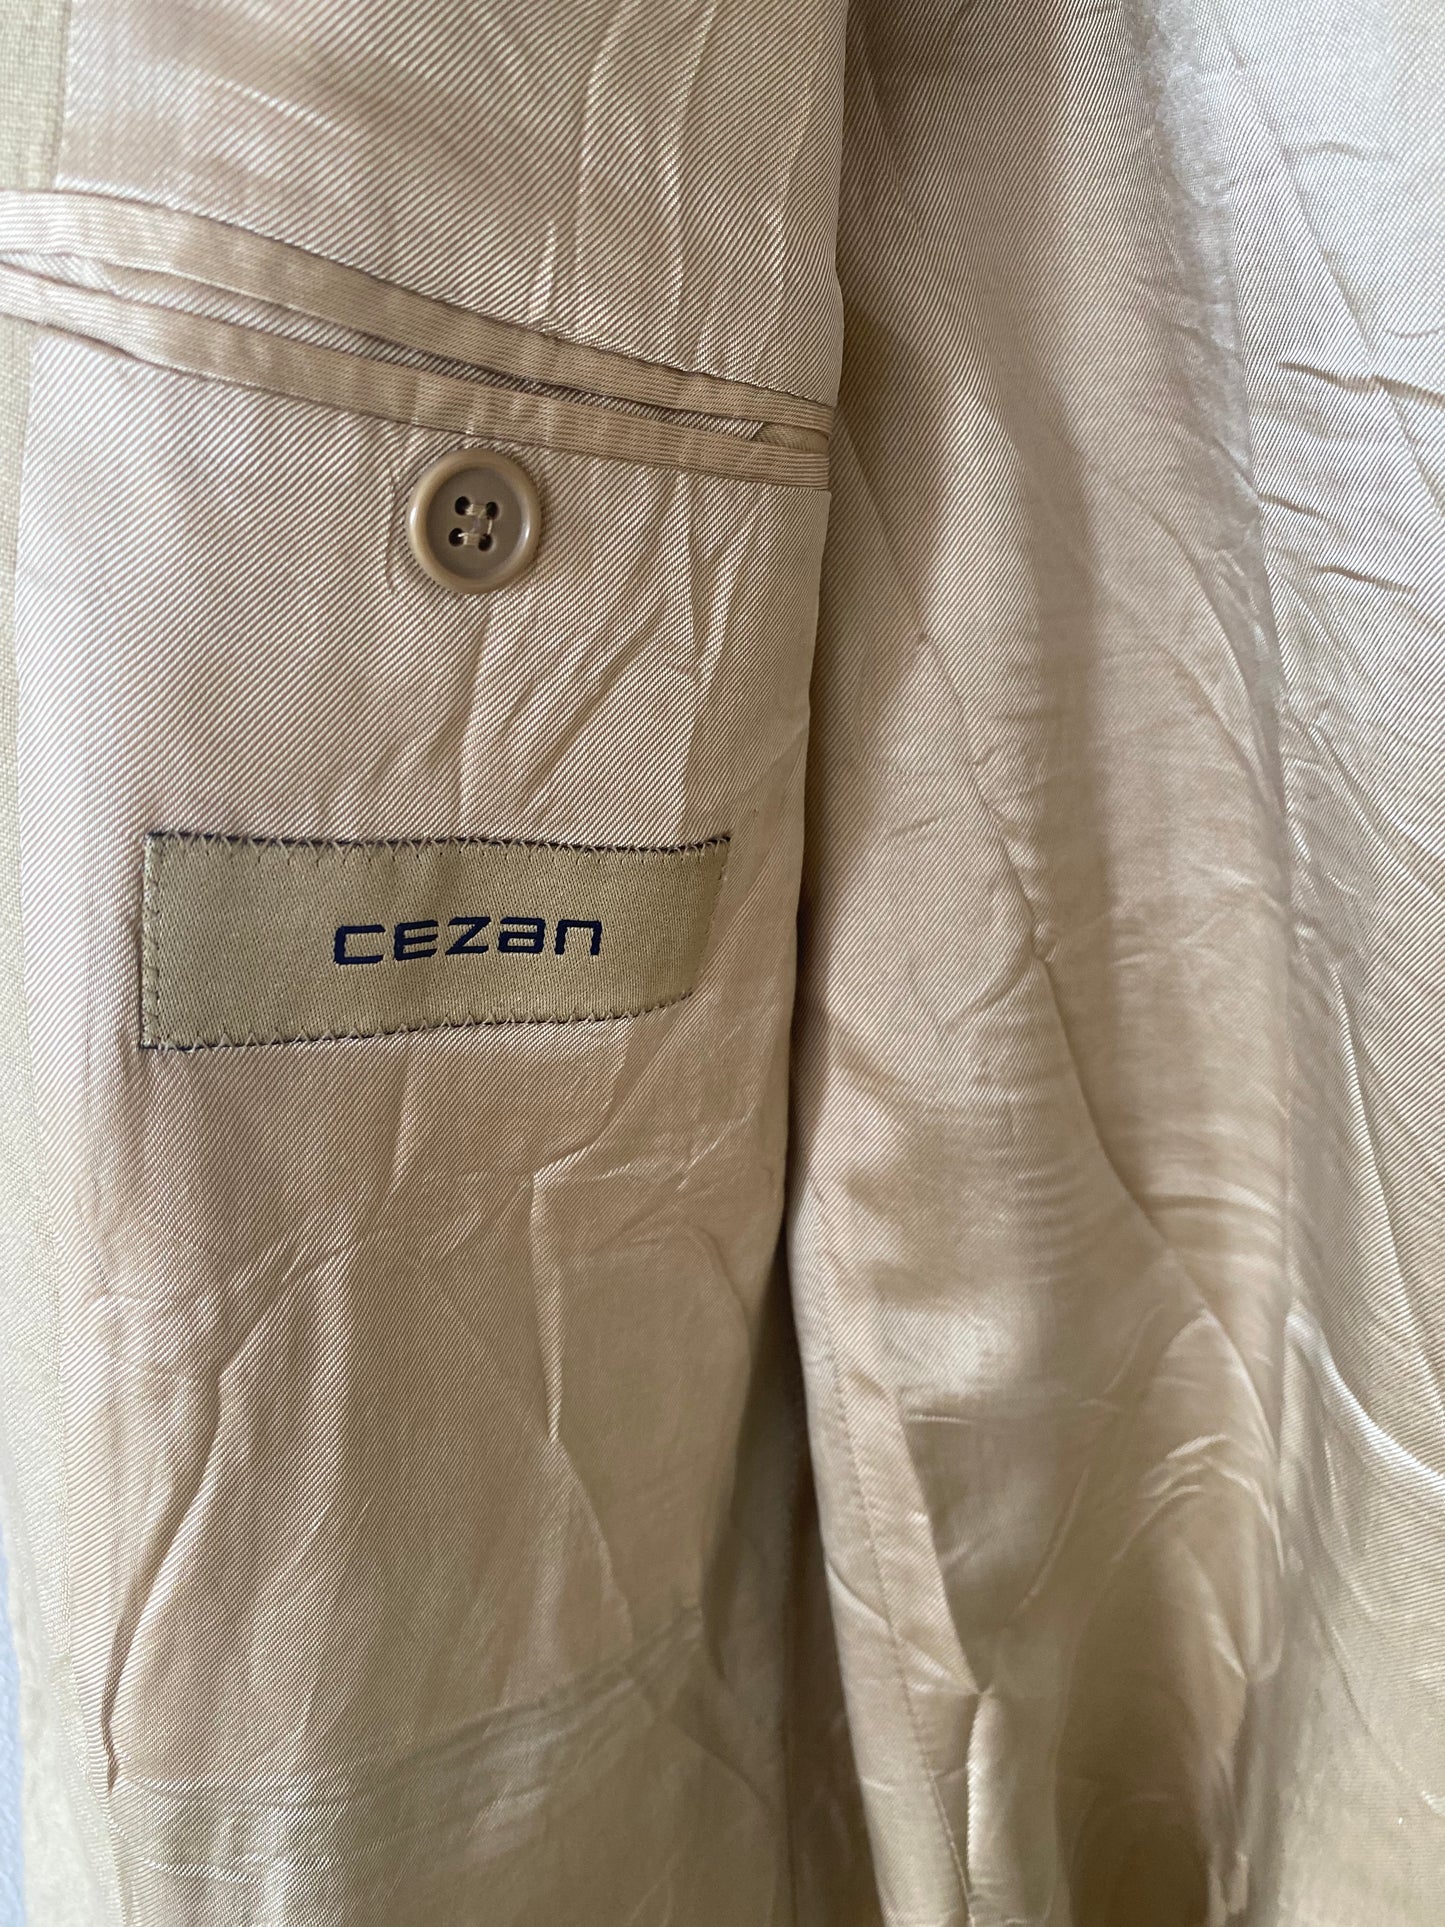 Blazer vintage Cezan